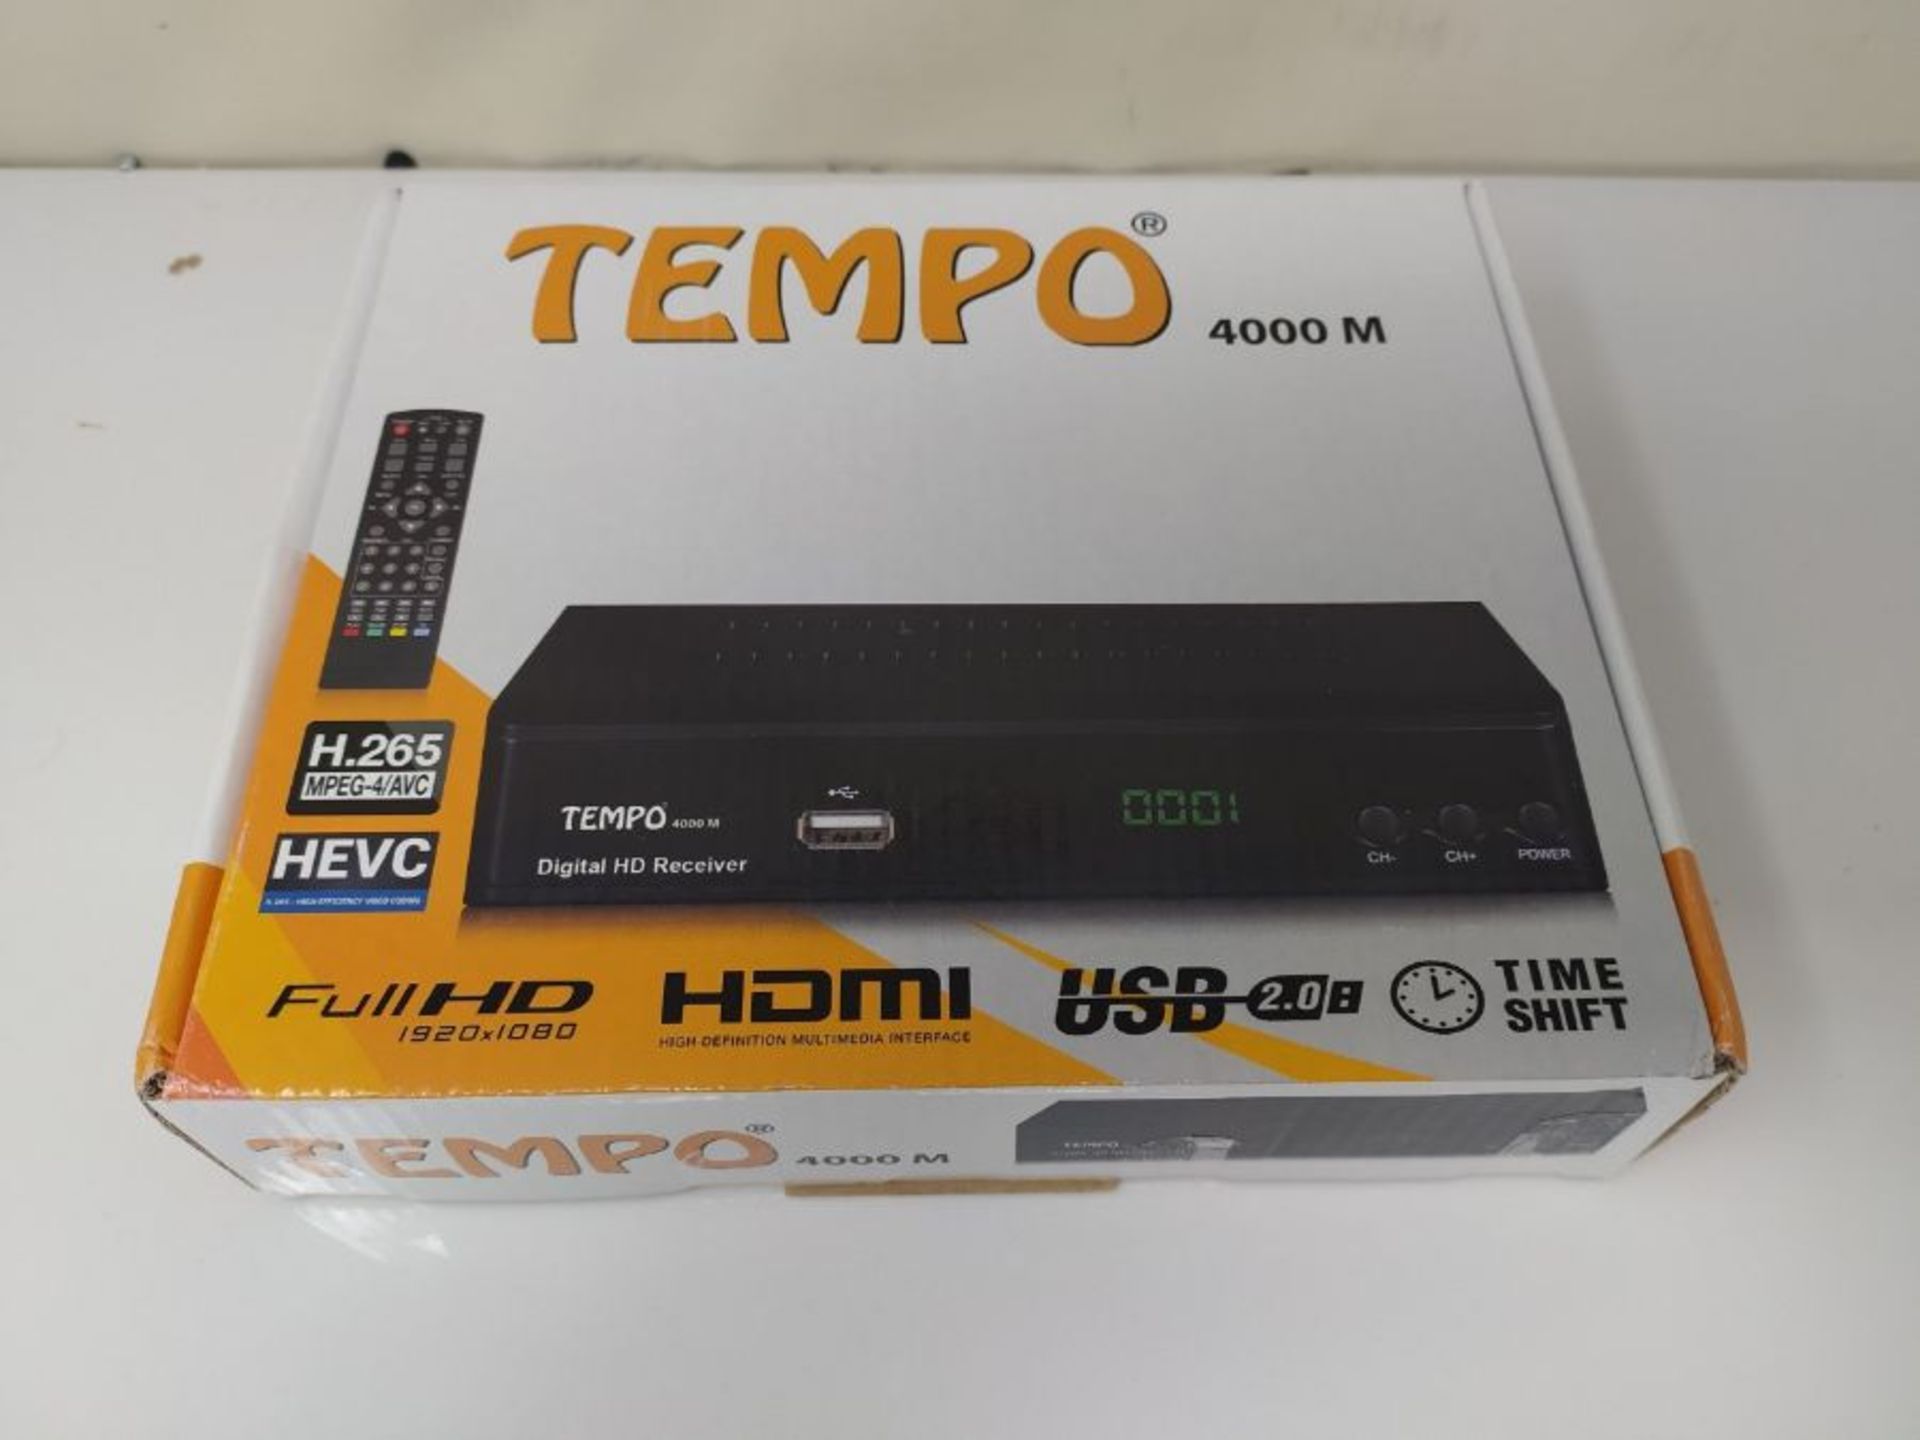 Tempo tmp4000 - Decoder Digitale Terrestre DVB T2 / HD / HDMI / Ricevitore TV / PVR / - Image 2 of 3